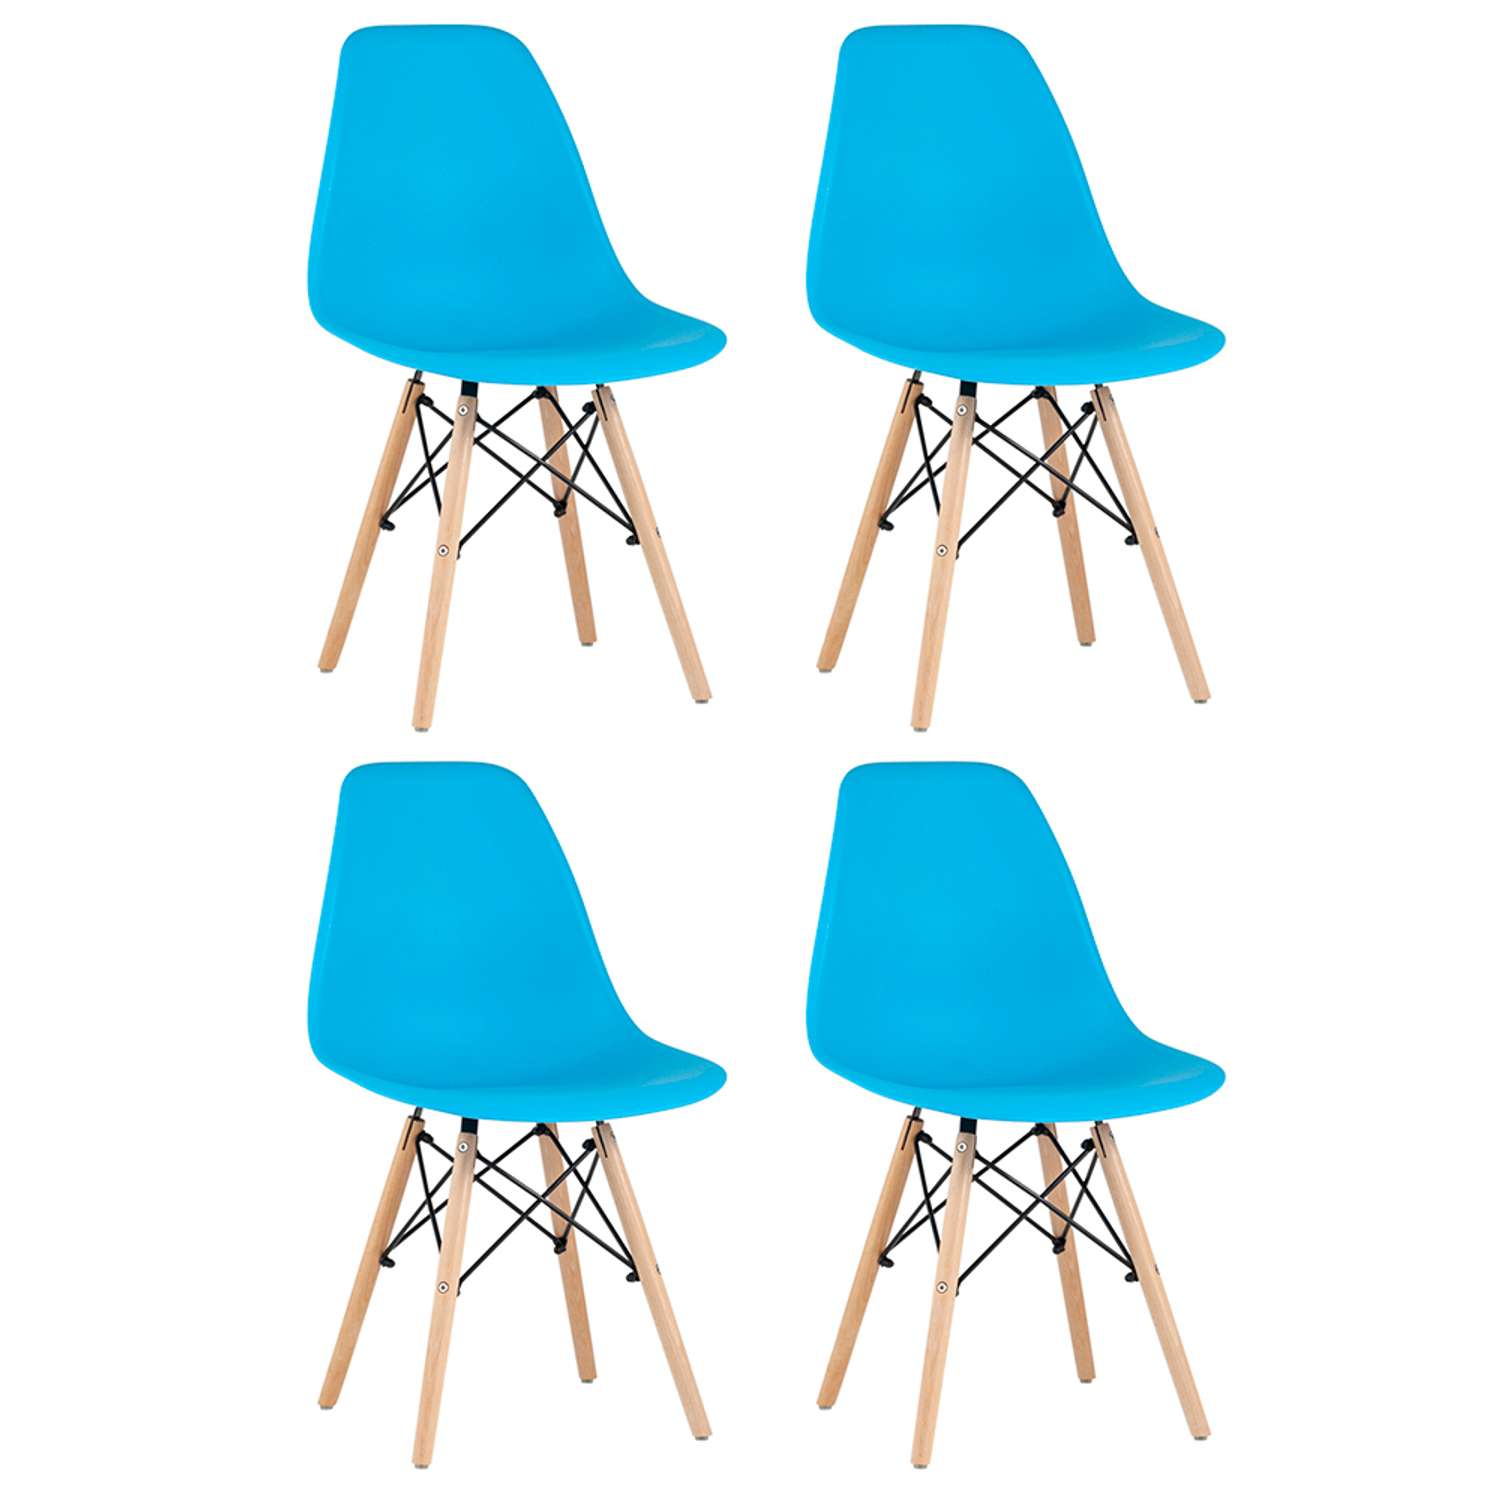 Комплект стульев Stool Group DSW Style голубой - фото 2